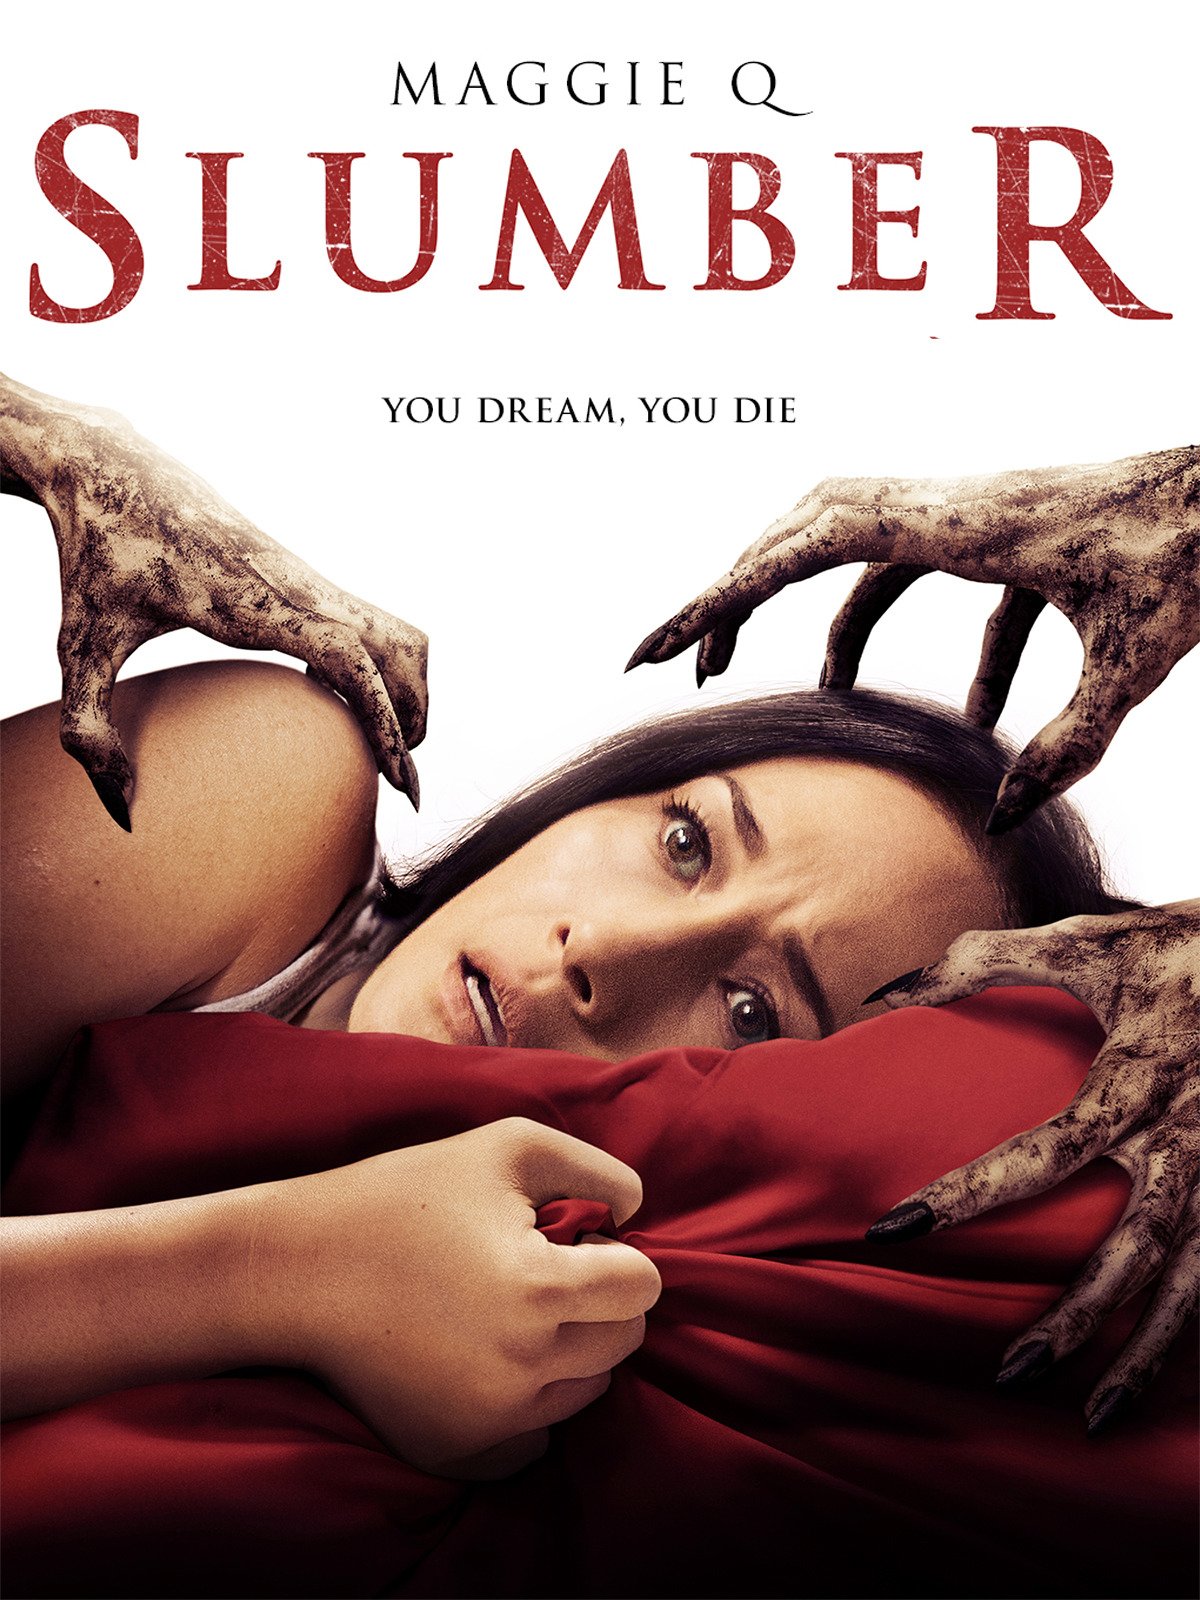 Maggie Q | SLUMBER [2017] Promotional Poster | CineHub